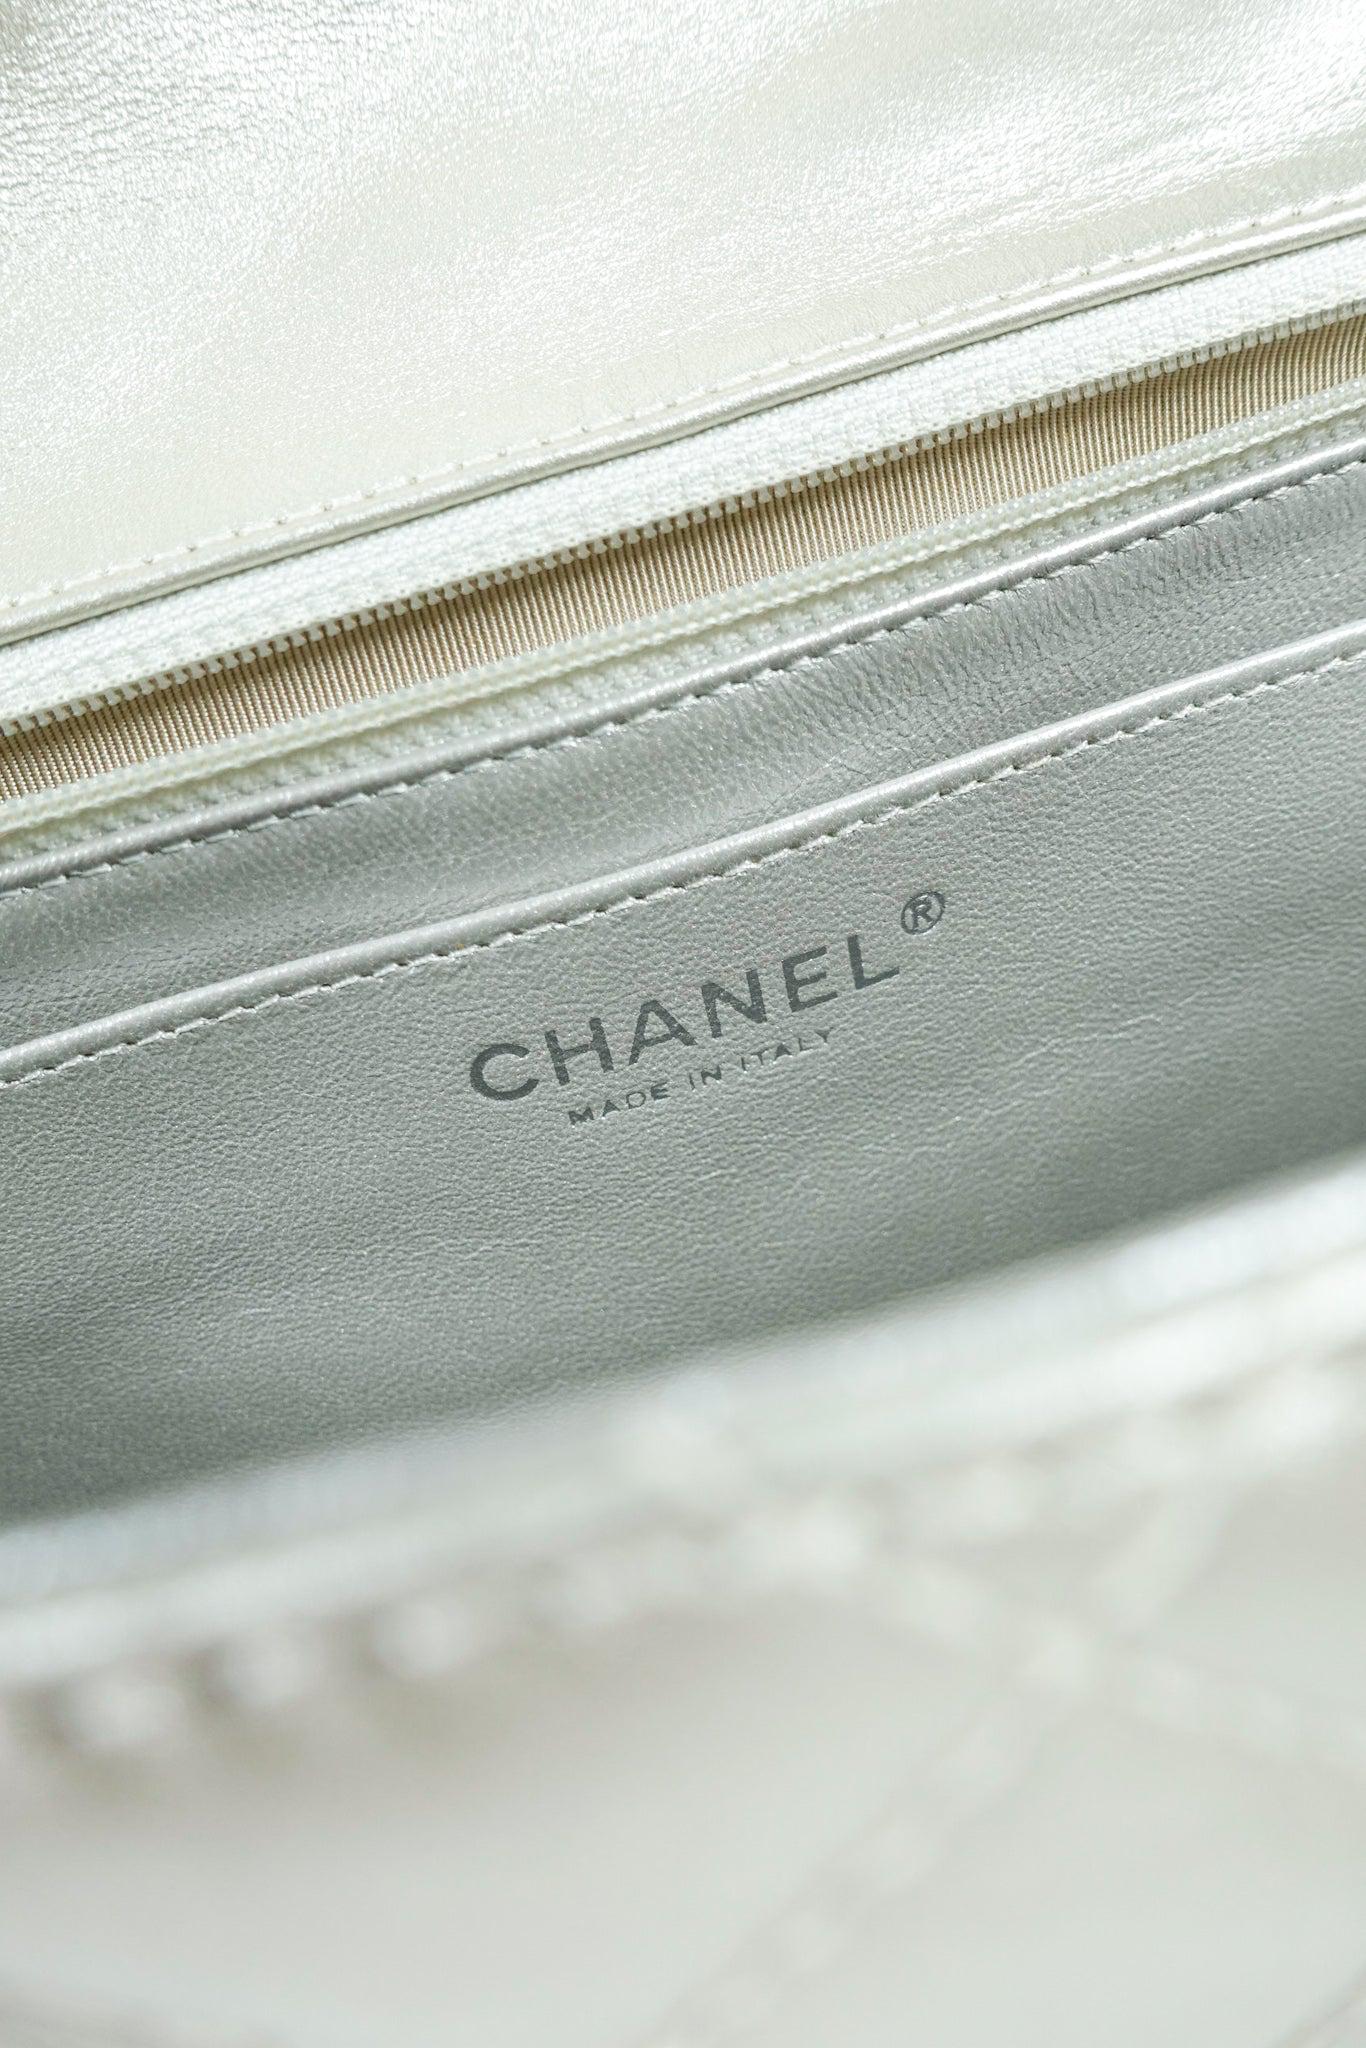 Chanel Metallic Silver Quilted Calfskin Reissue Clutch (Series 12)